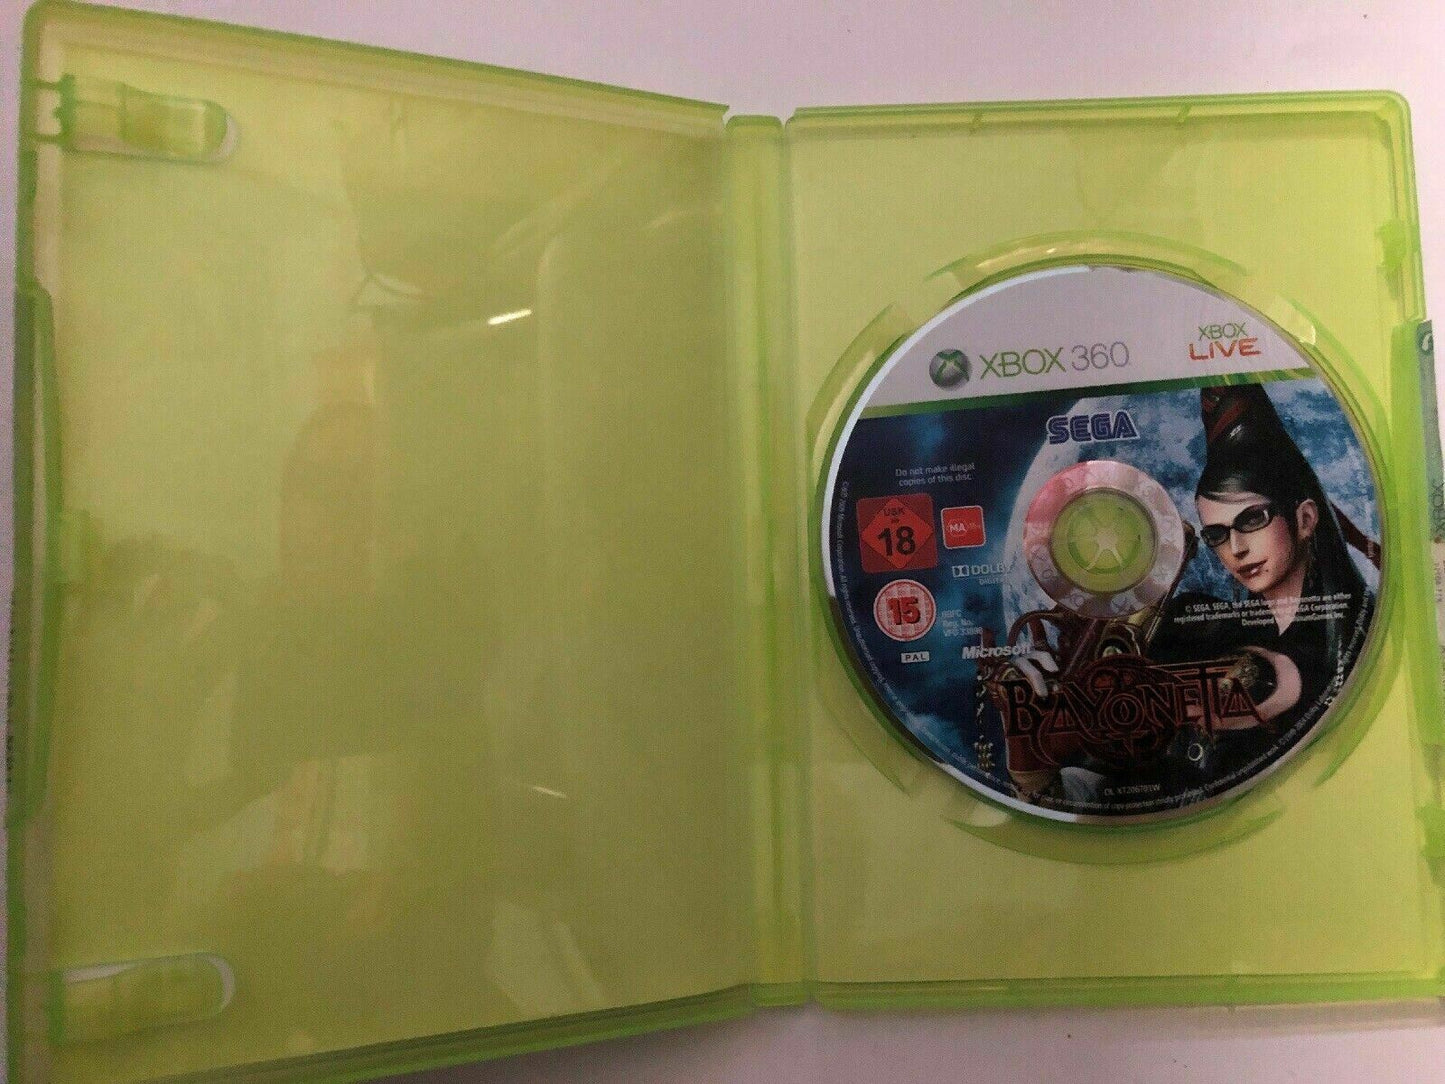 Bayonetta - Microsoft Xbox 360 SEGA PAL Game